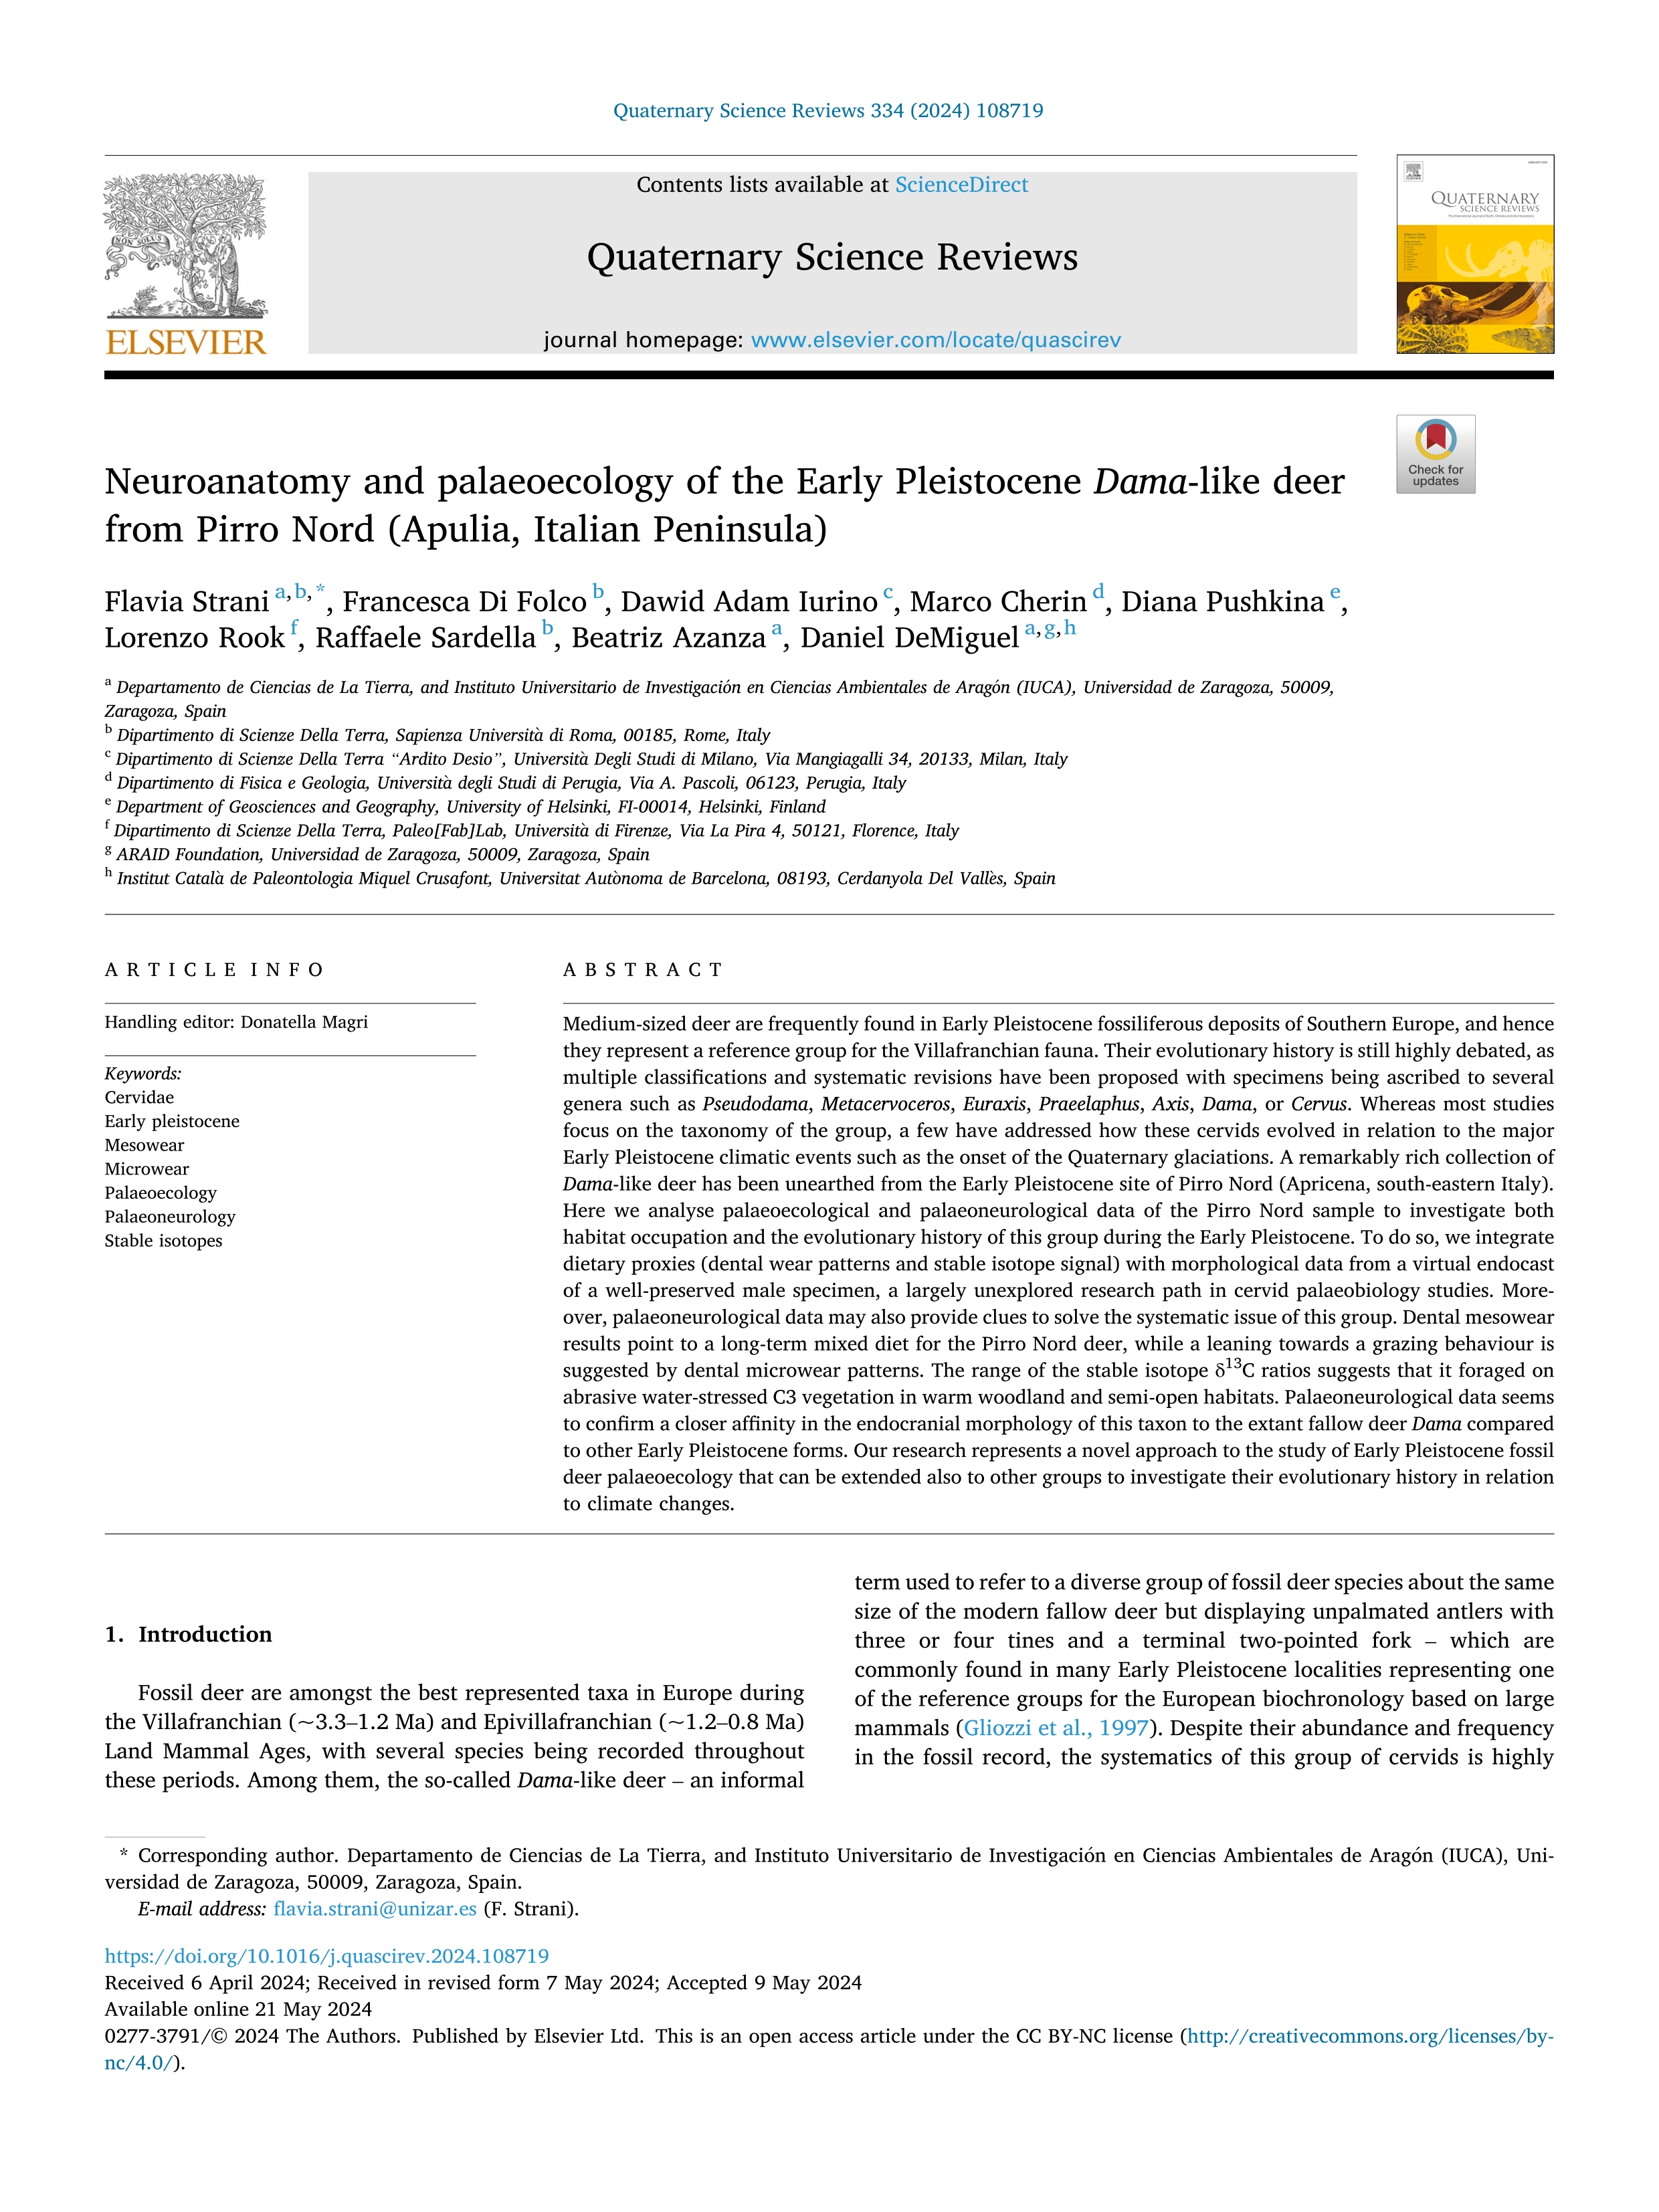 Neuroanatomy and palaeoecology of the Early Pleistocene Dama-like deer from Pirro Nord (Apulia, Italian Peninsula)